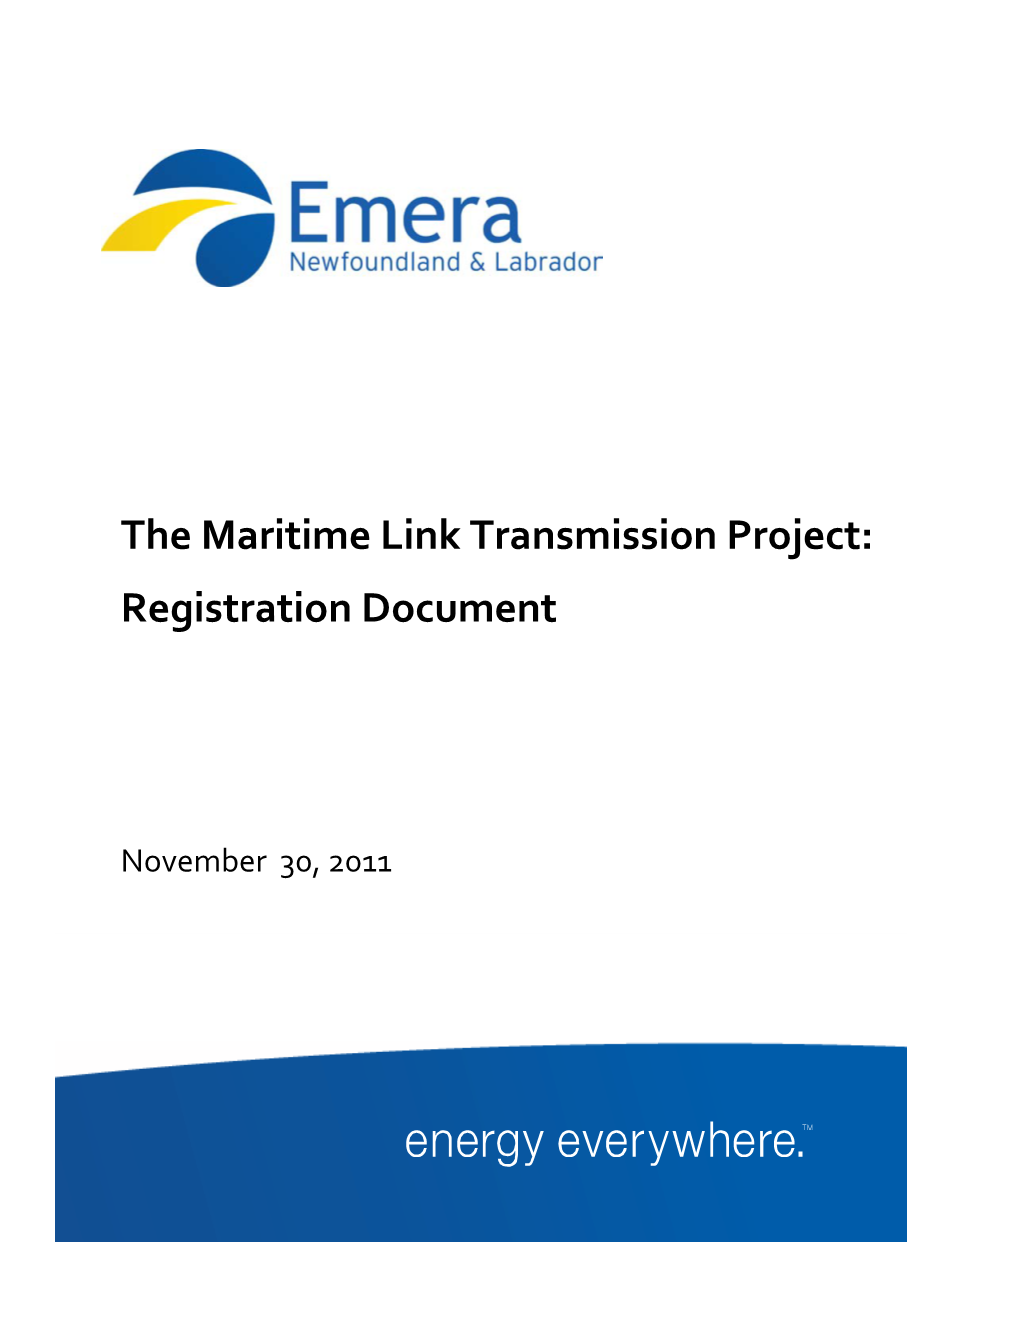 Maritime Link Transmission Project: Registration Document